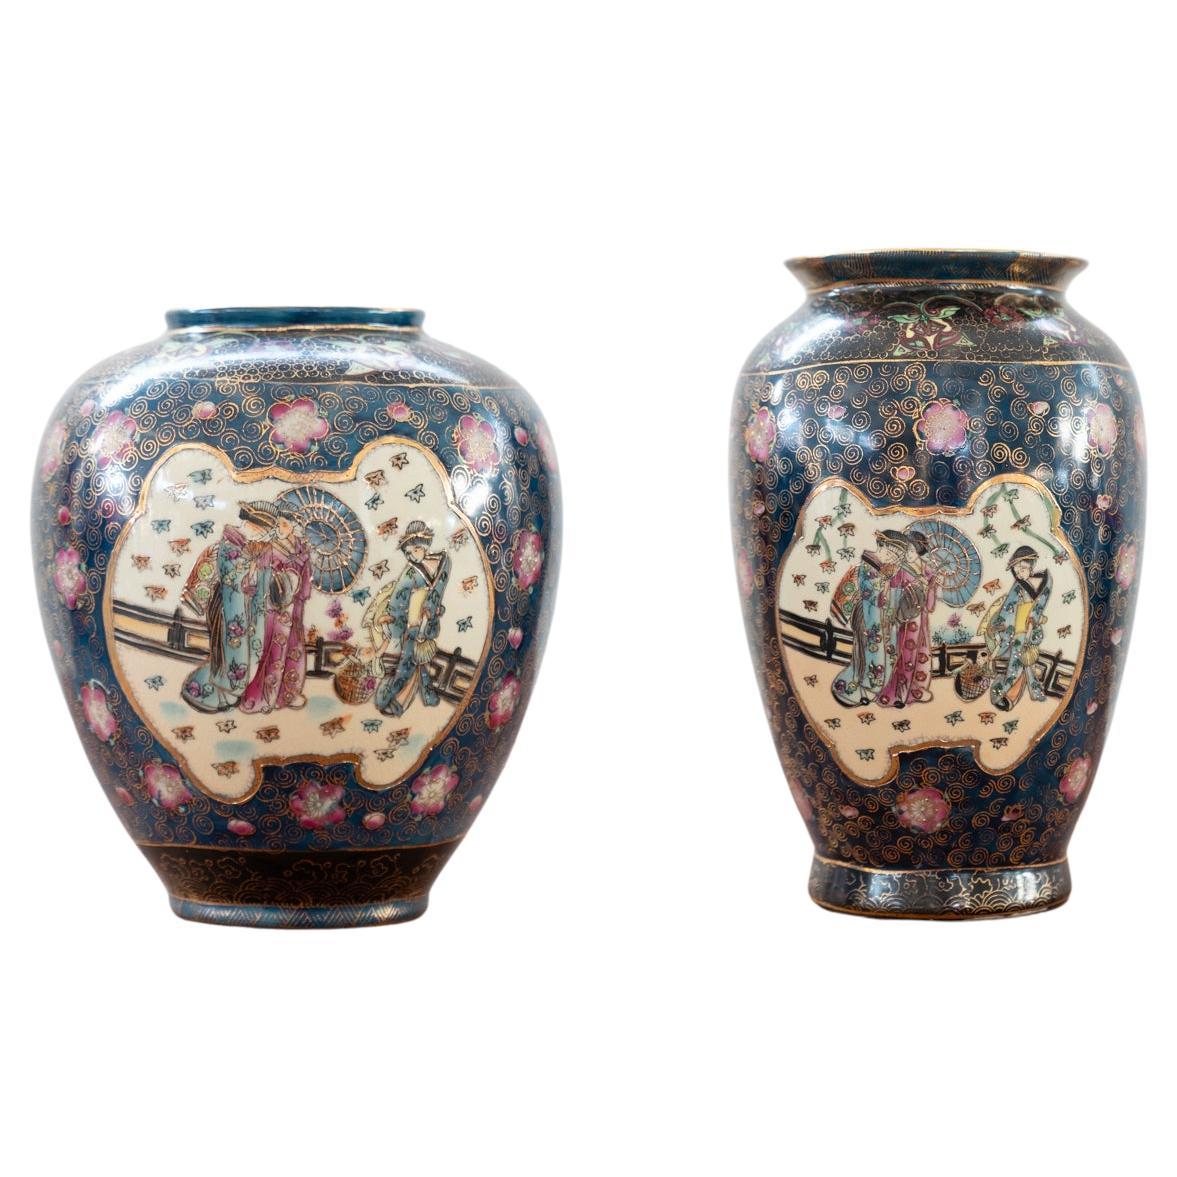 Japanese antique porcelain porcelain vases Meiji period 19th century For Sale